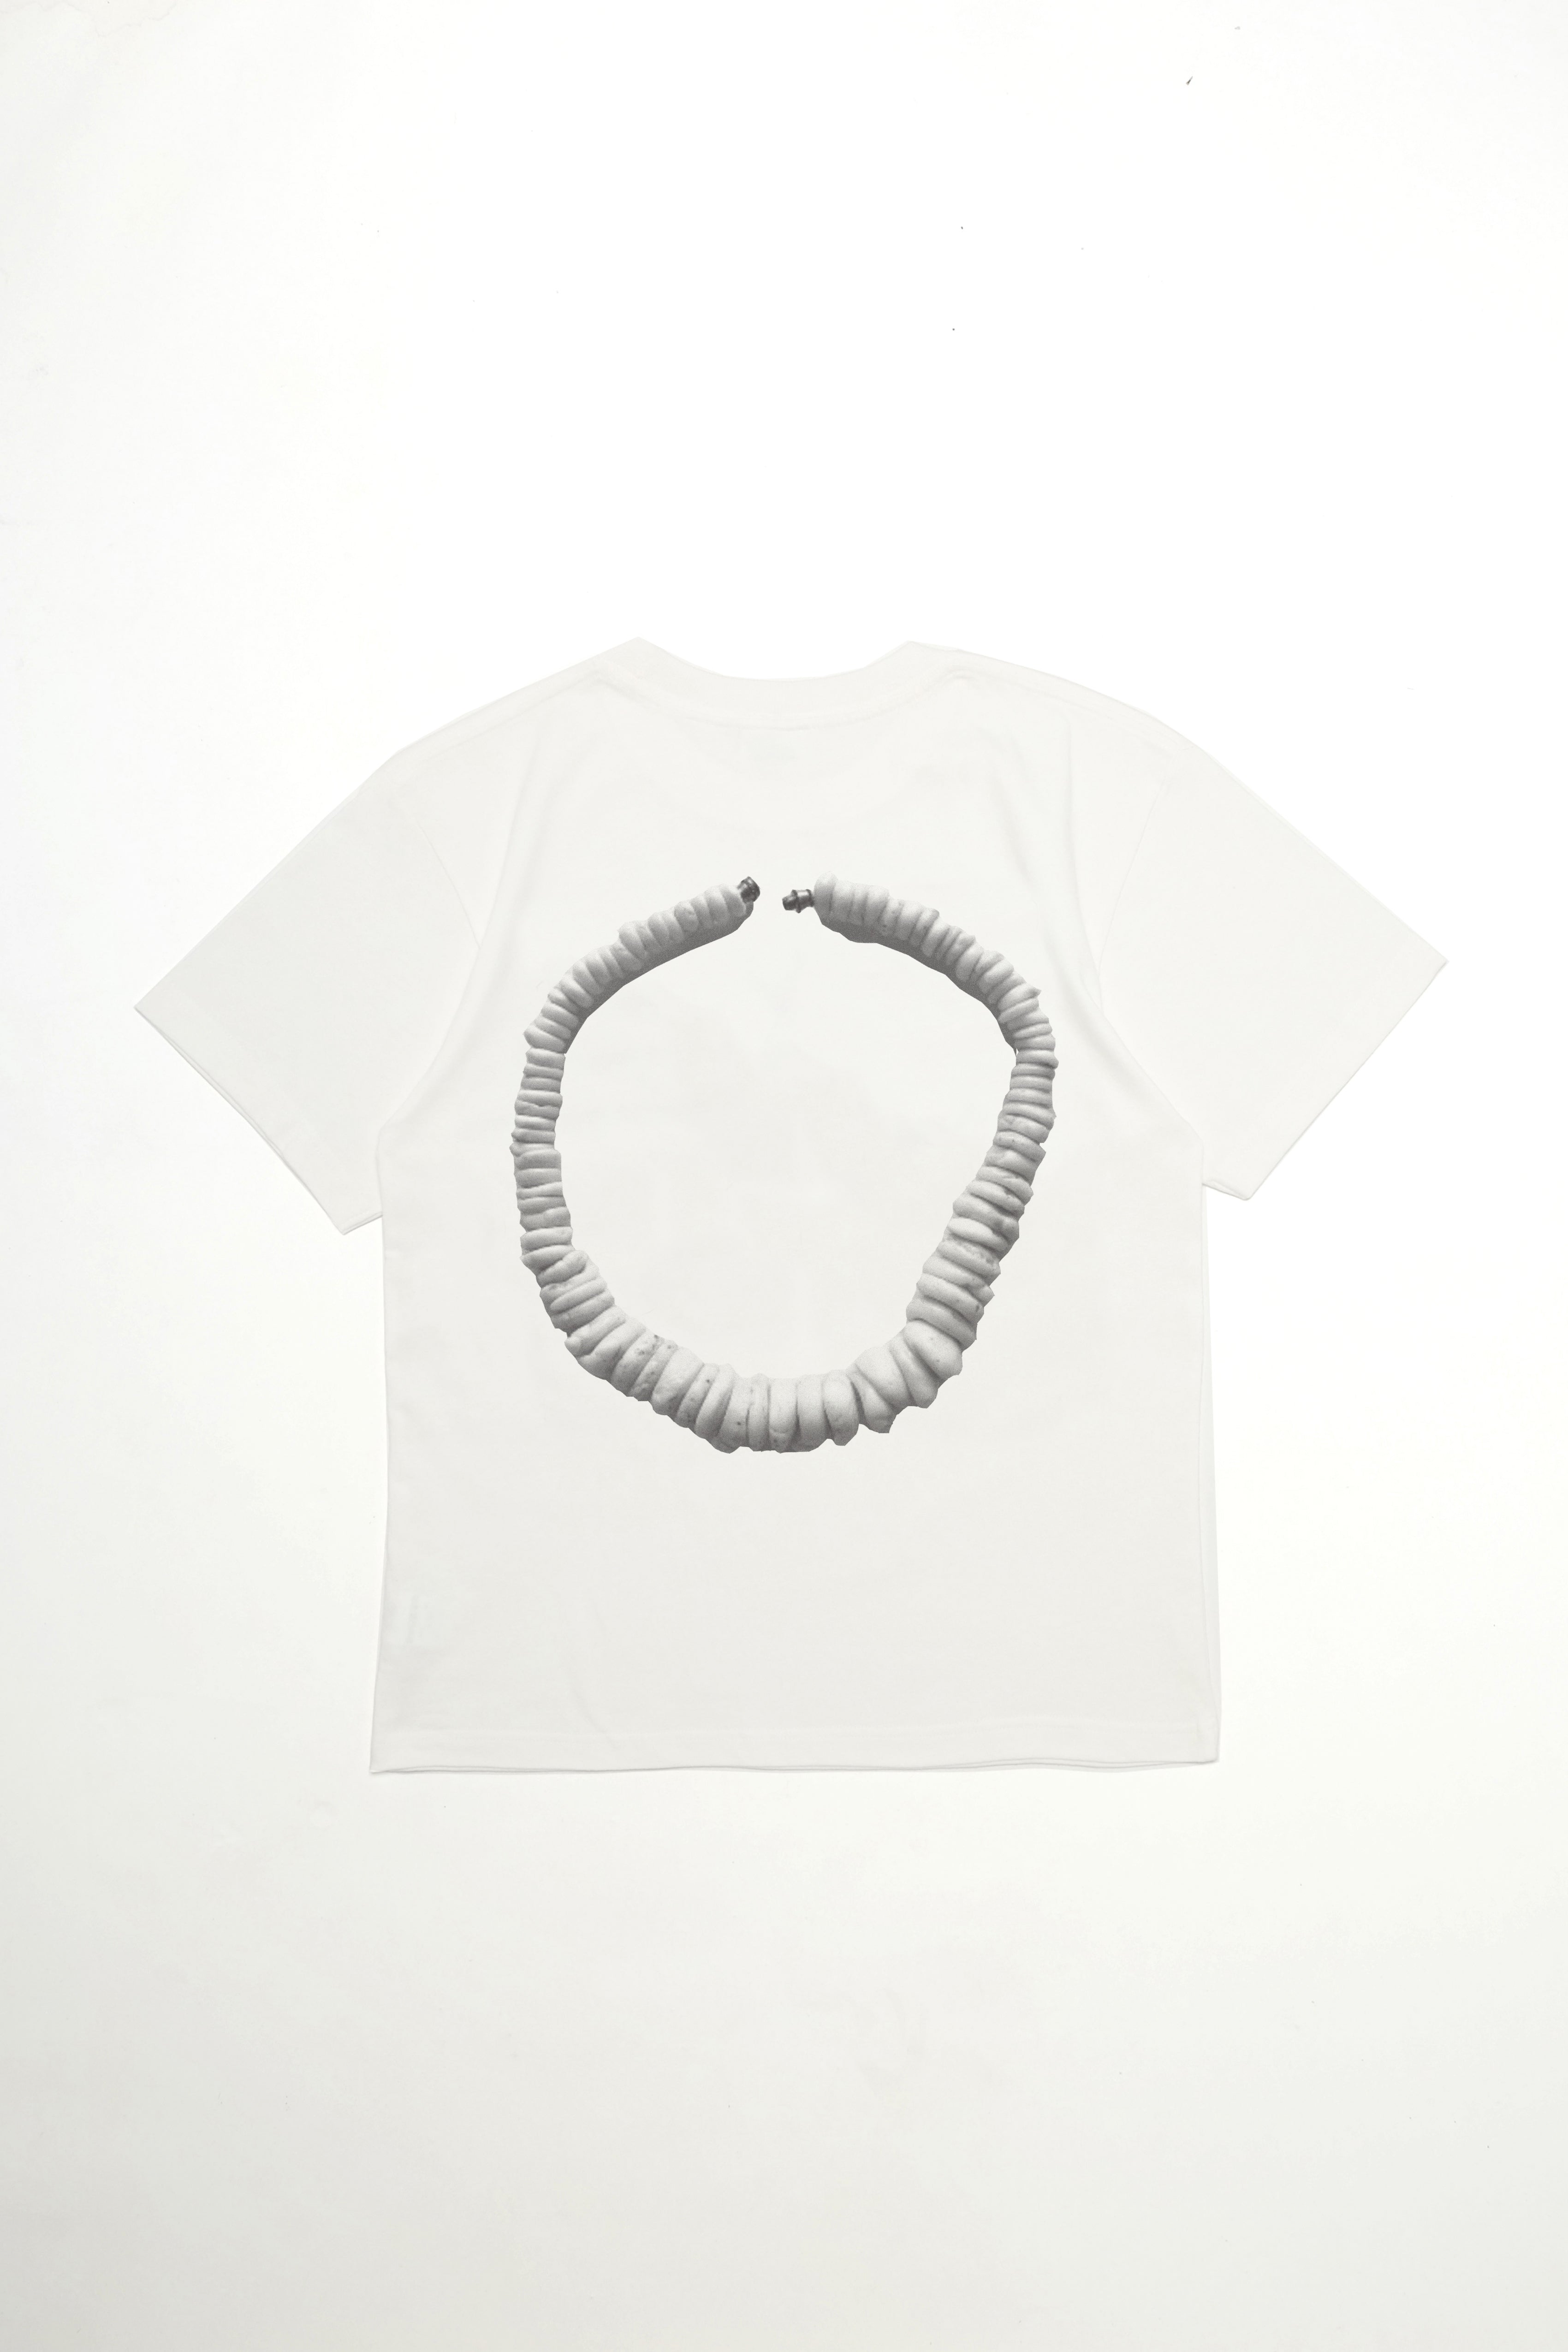 T-Shirt - Puka Shell - White